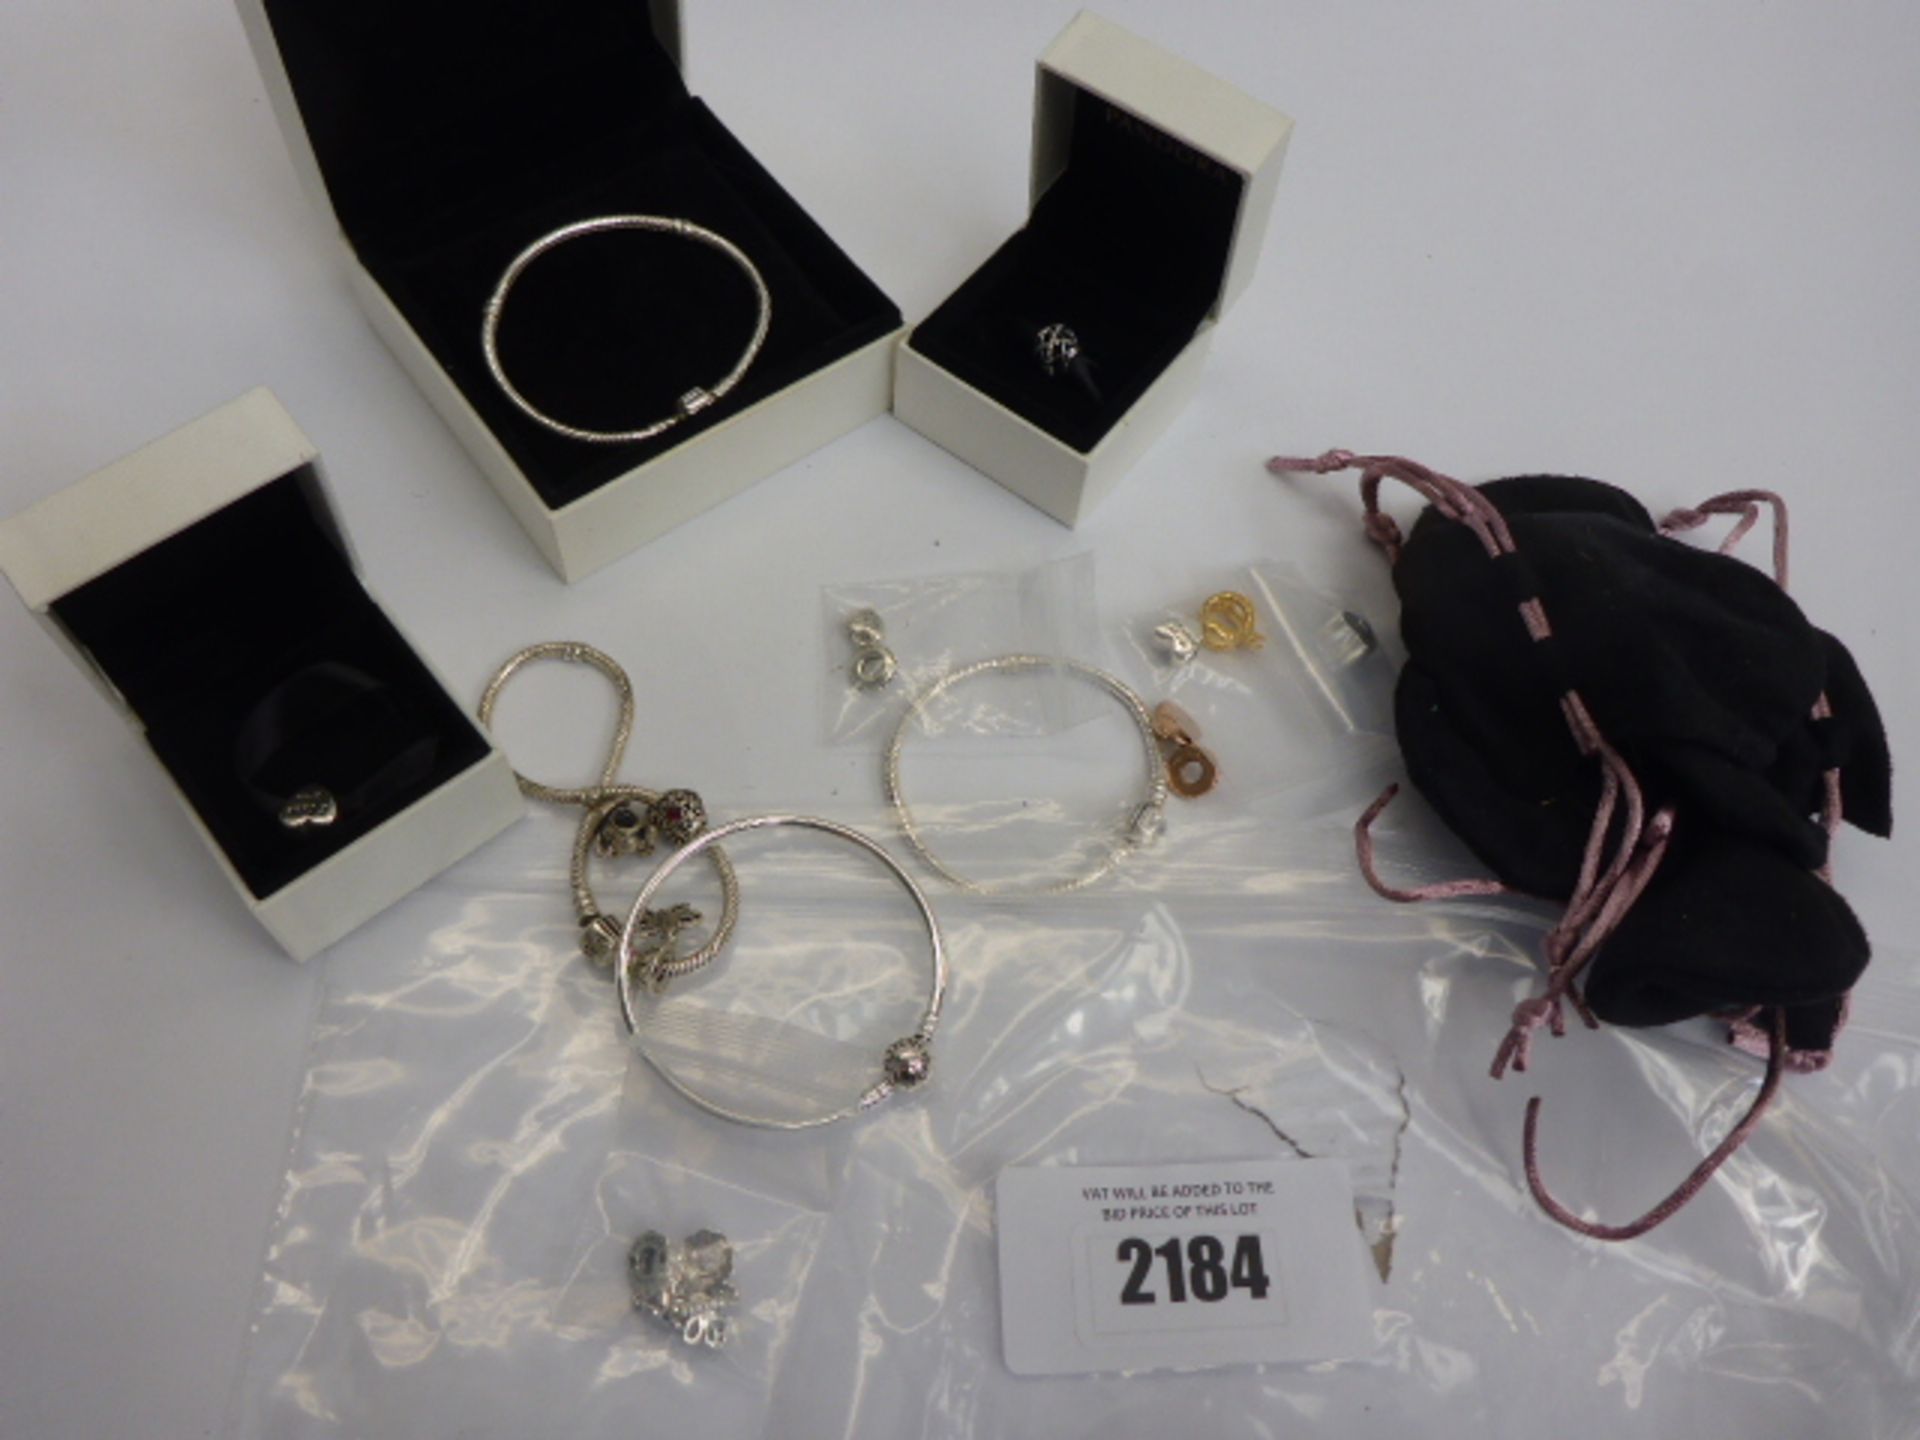 Quantity of Pandora jewellery; bangle, bracelets and charms